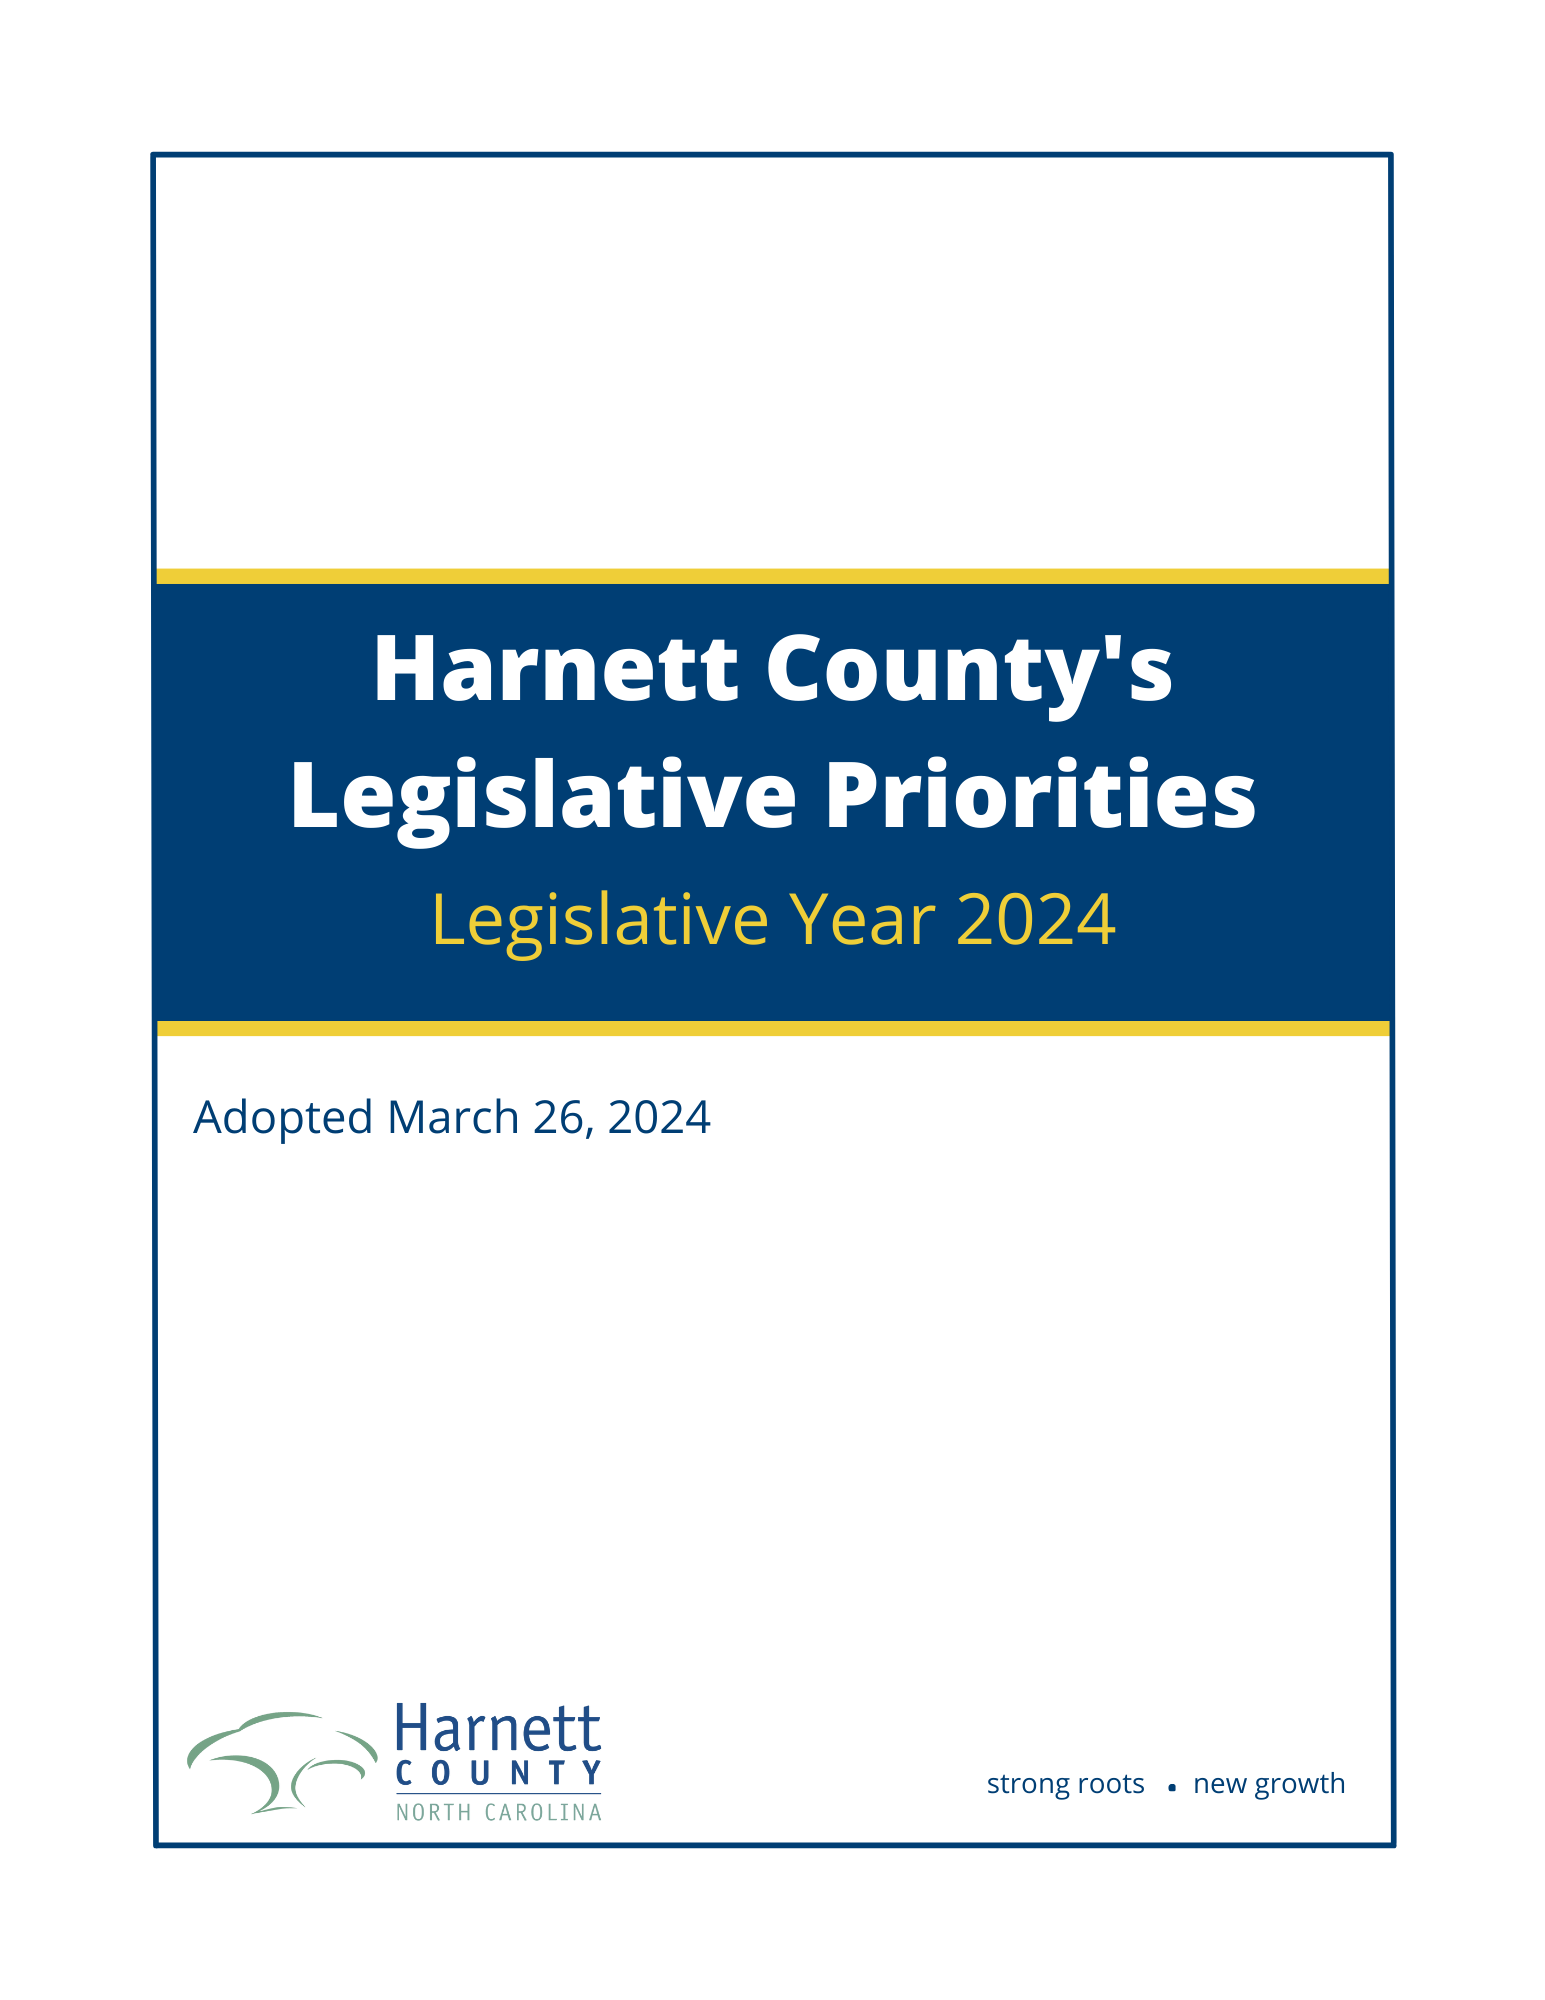 2024 Legislative Priorities